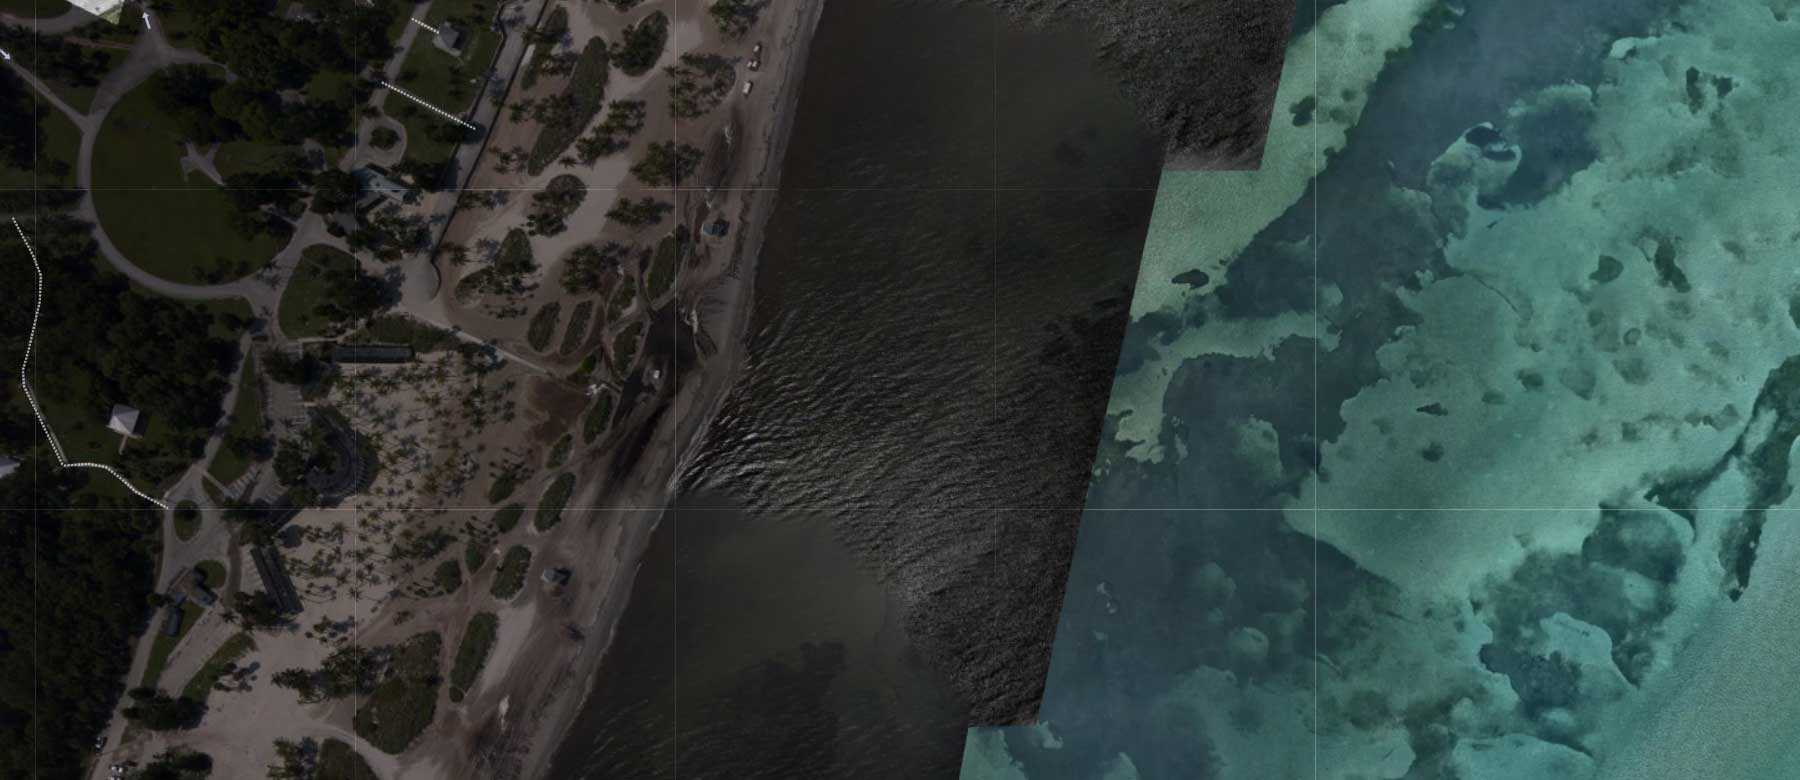 an image showing  Key Biscayne, Florida after Dorian